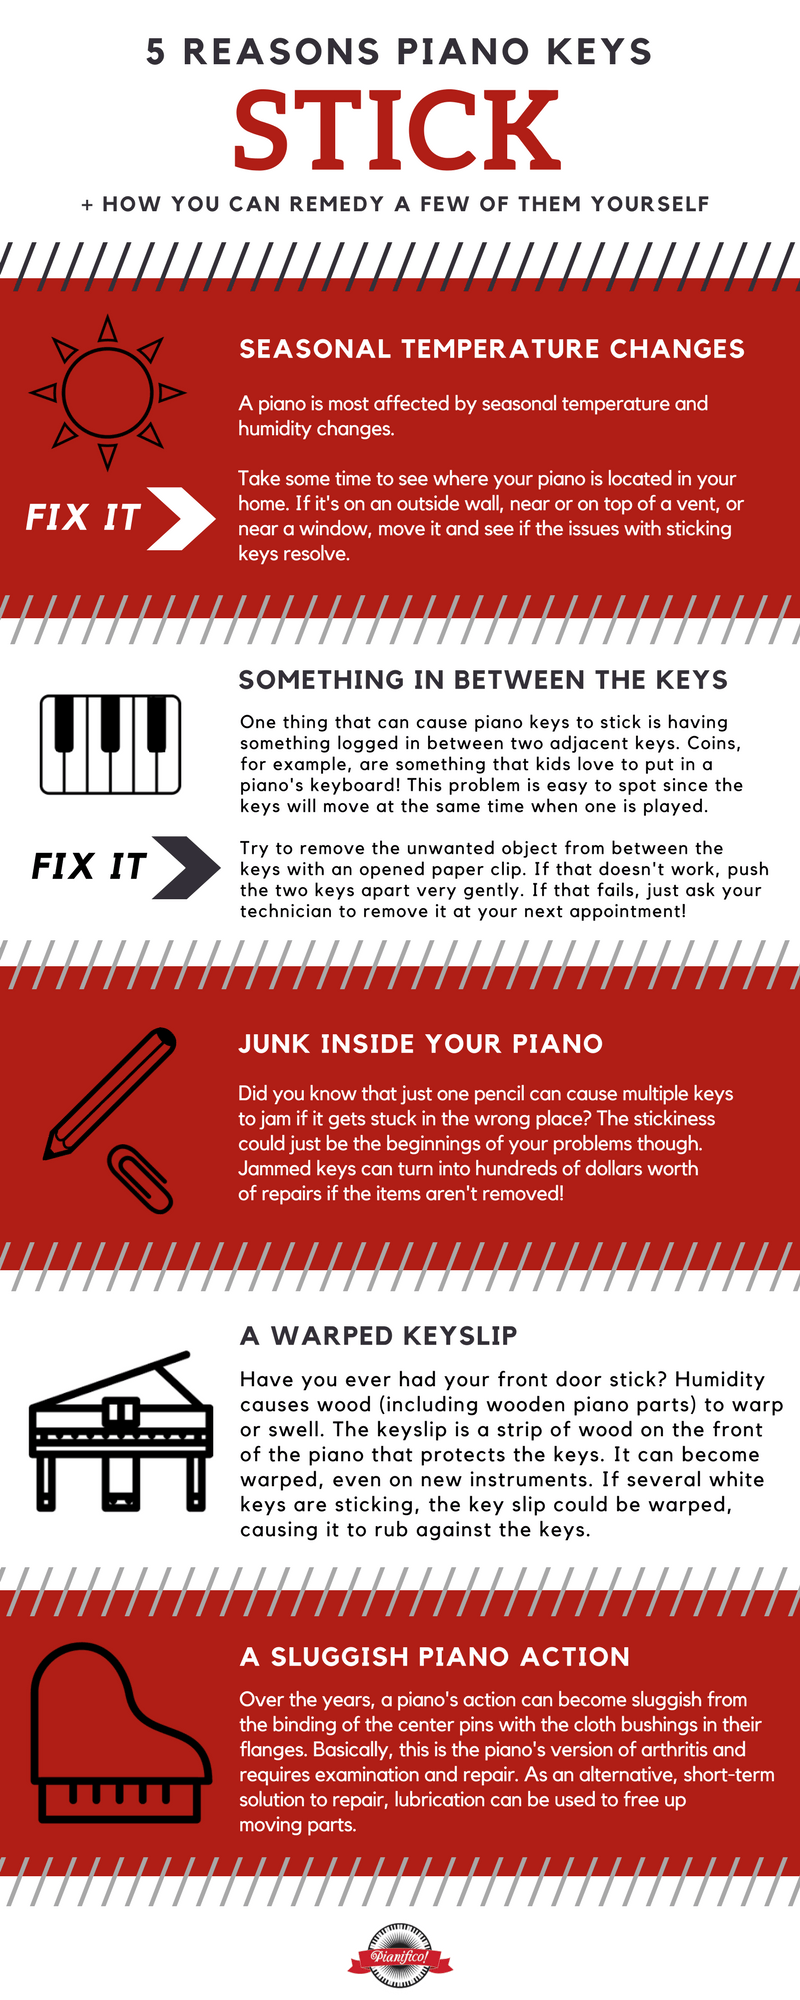 Sticking piano keys infographic